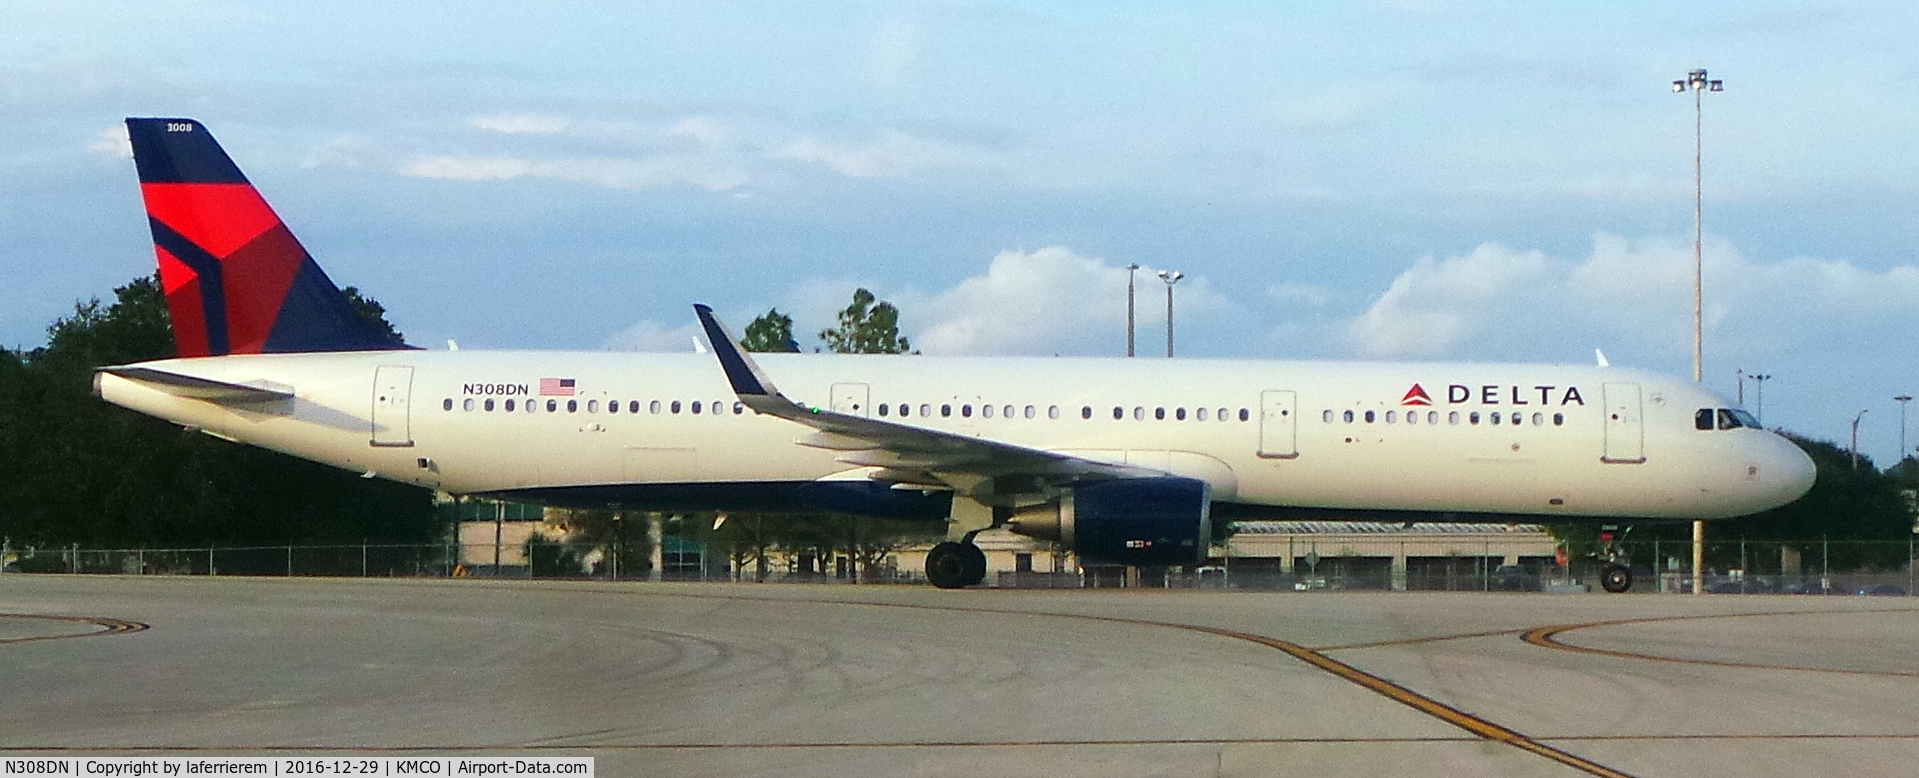 N308DN, 2016 Airbus A321-211 C/N 7233, Delta flight 1840 just arrived in Orlando from Atlanta